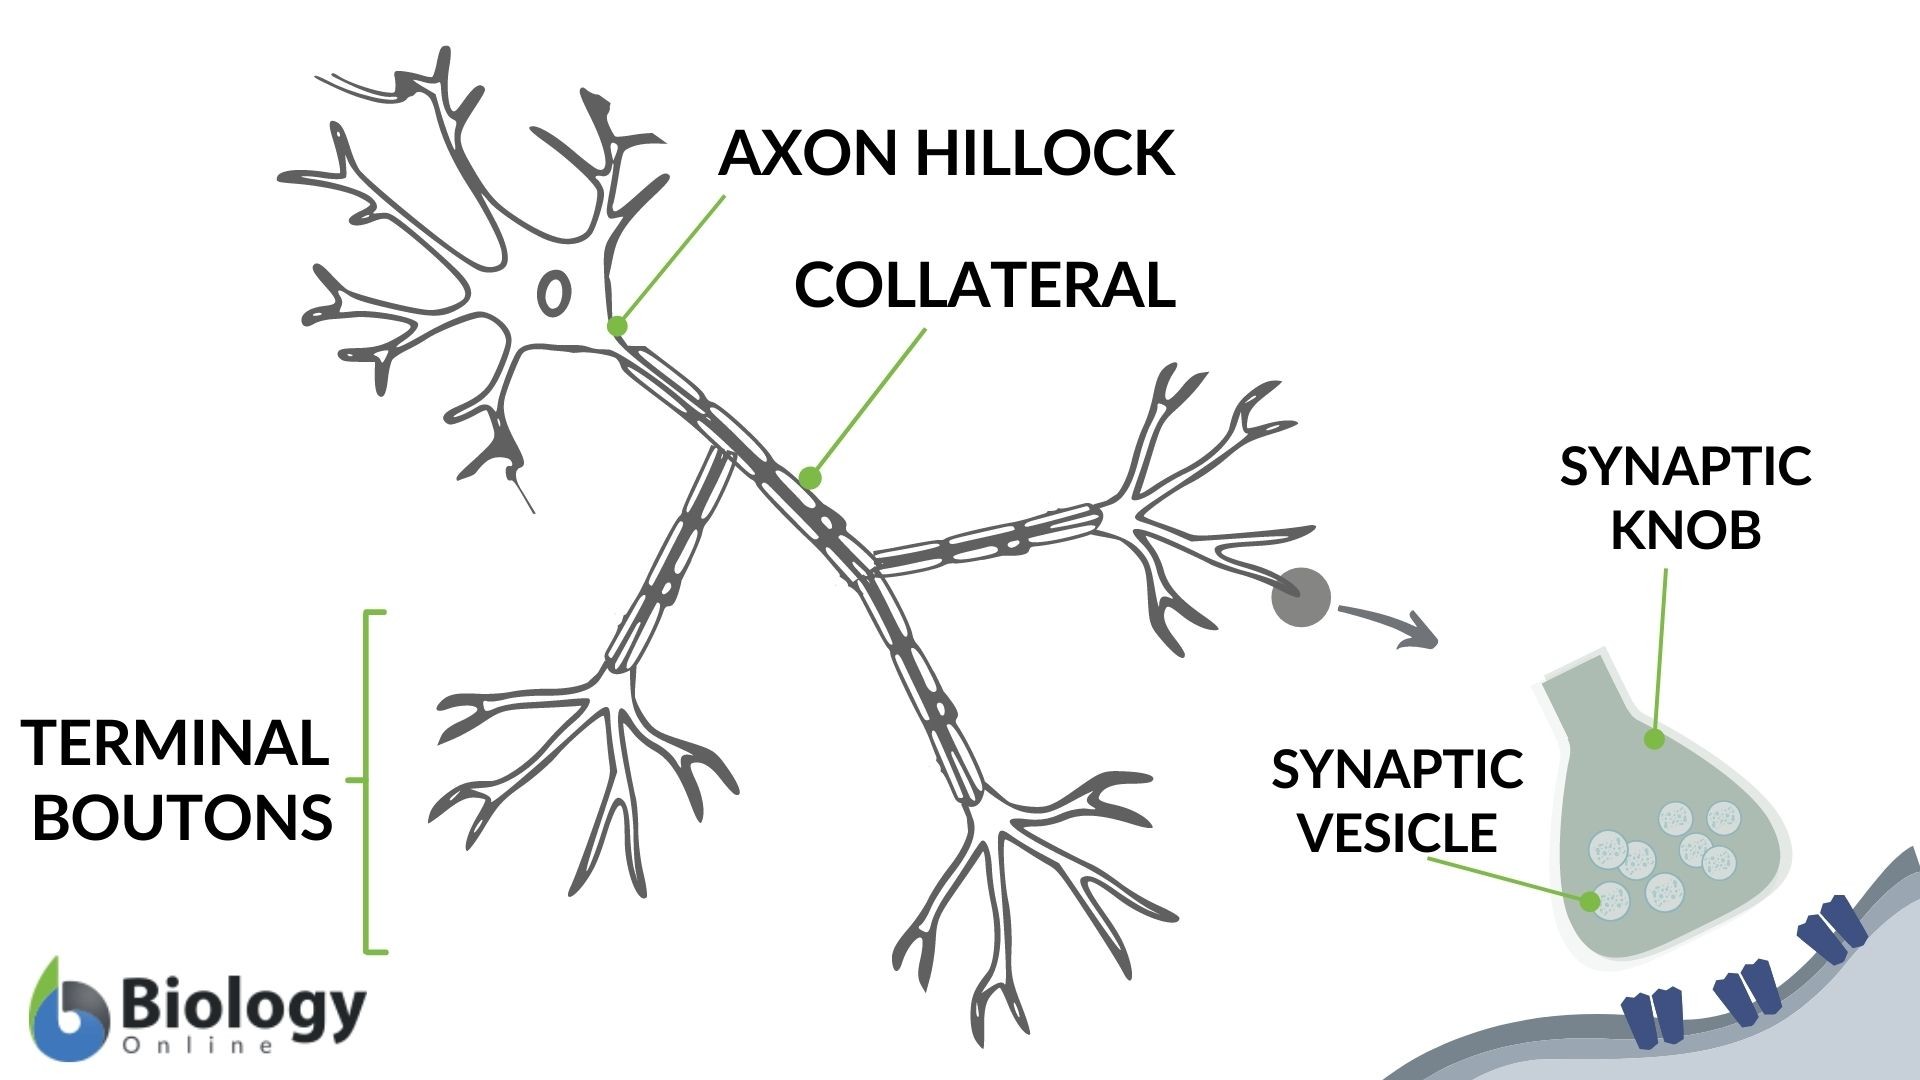 Axon hillock - definition